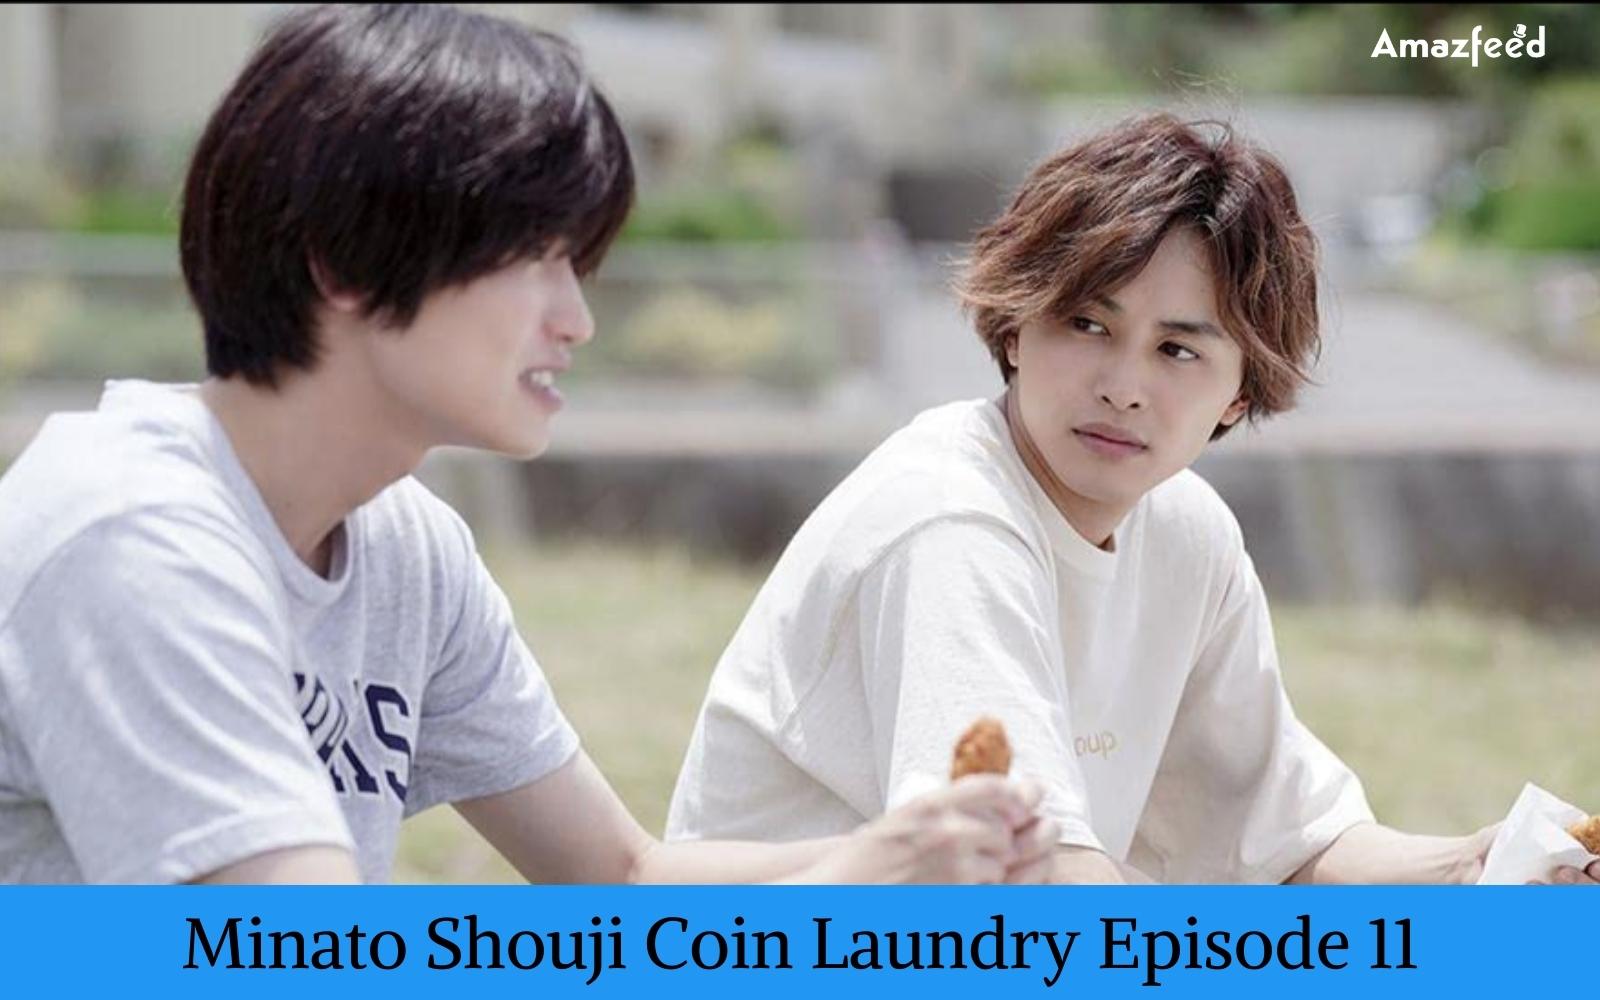 Minato Shouji Coin Laundry Episode 11 ⇒ Countdown, Release Date, Spoilers, Recap, Cast & News Updates